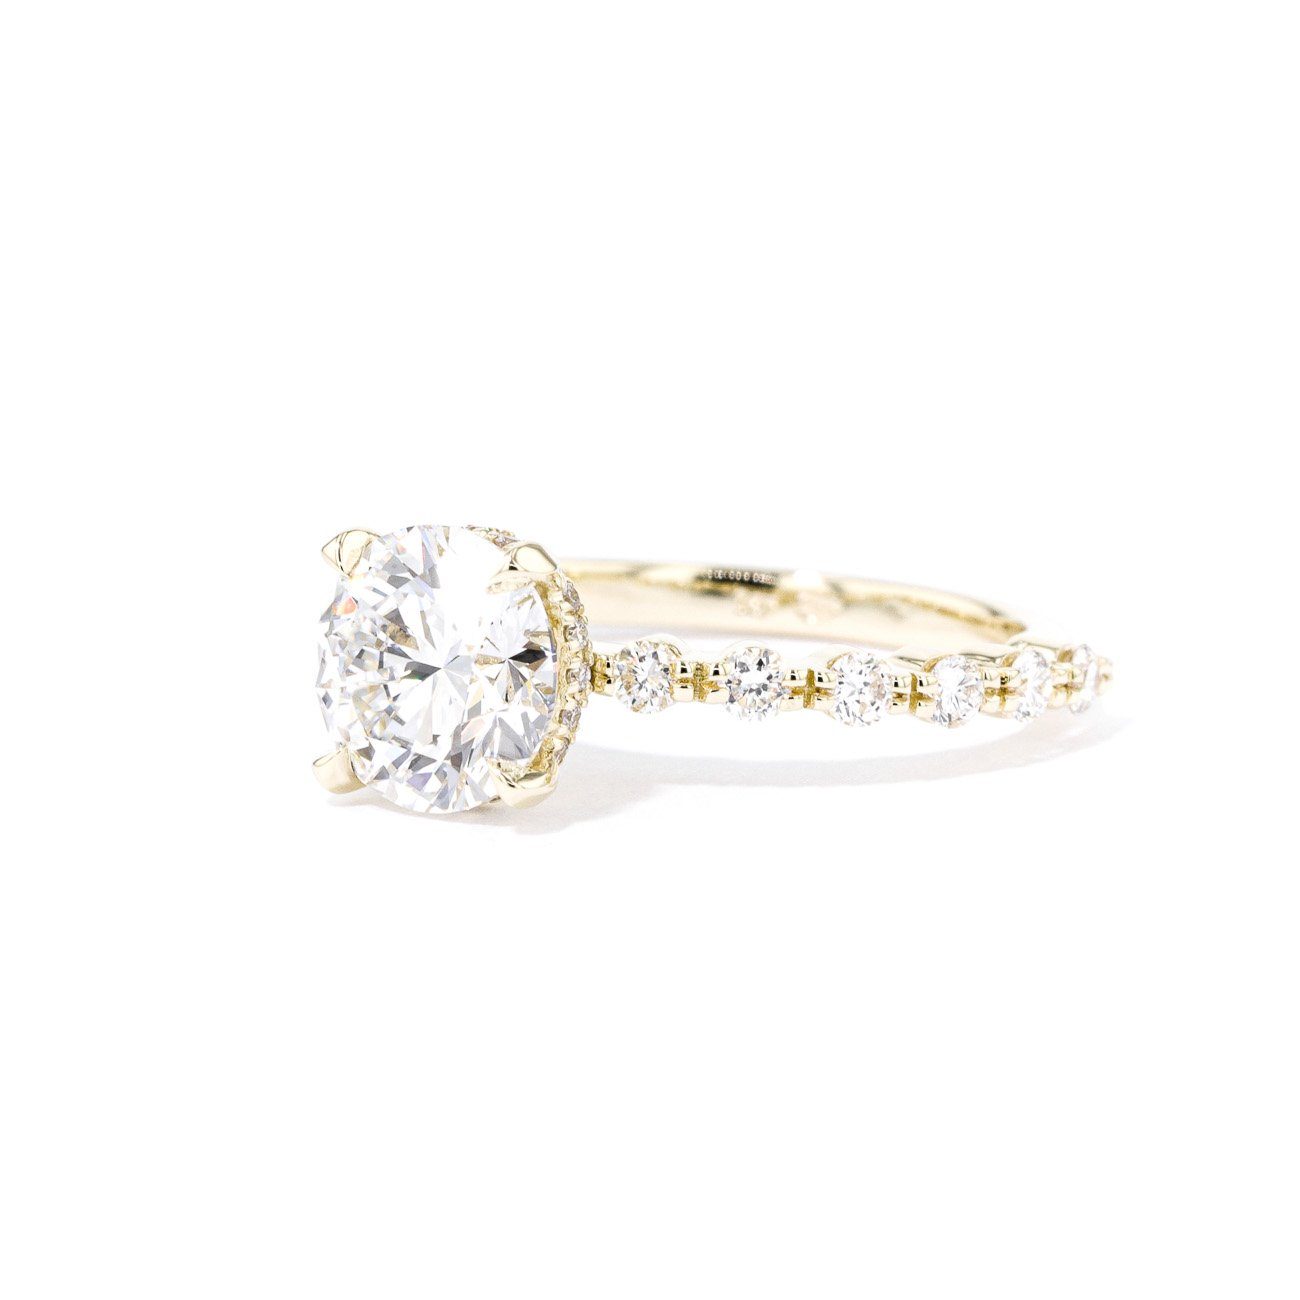 2.0mm Mia Round Engagement Rings Princess Bride Diamonds 